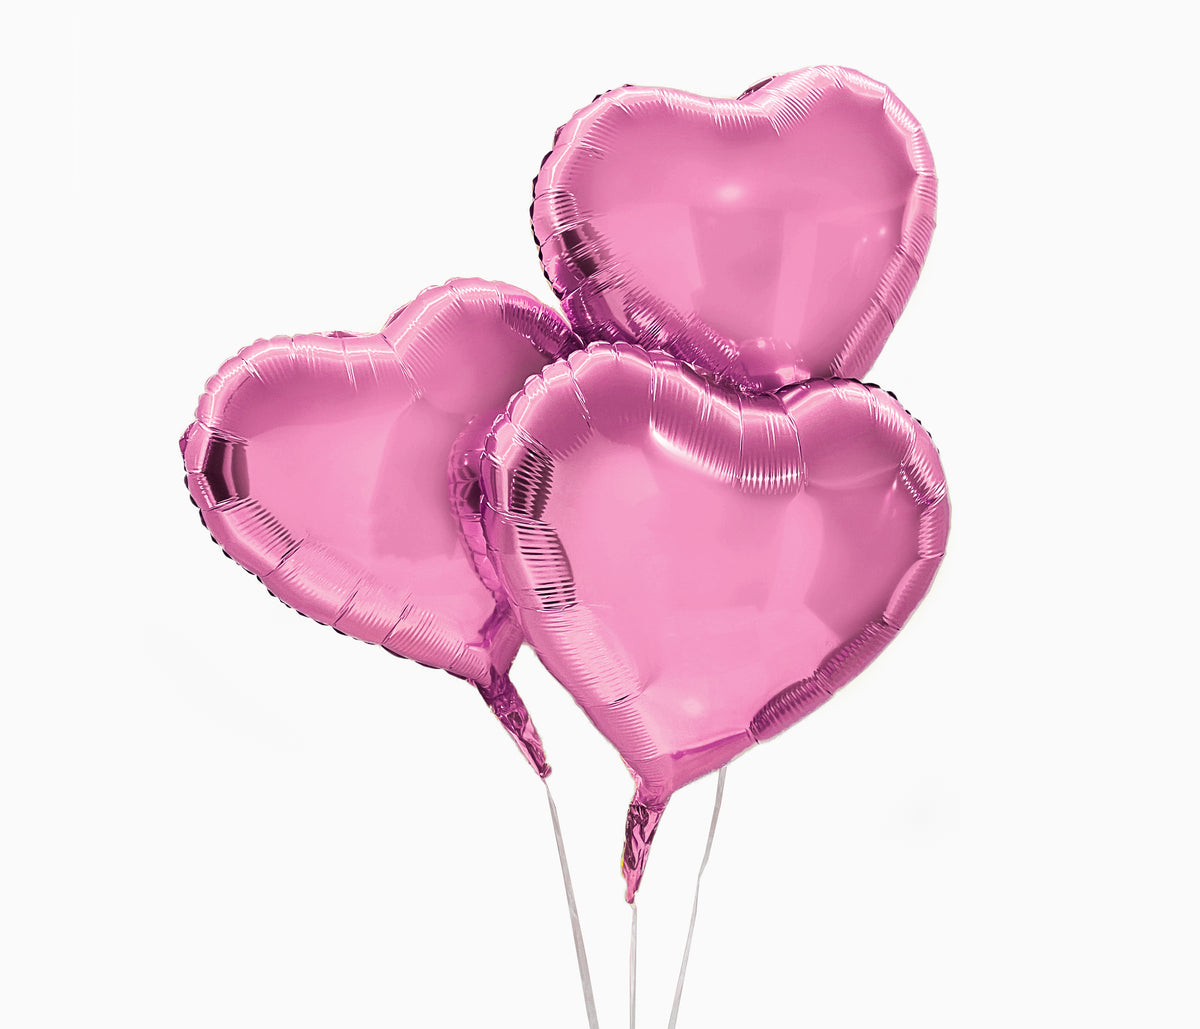 Bulk Pink Heart-Shaped Foil Balloons at DollarTree.com